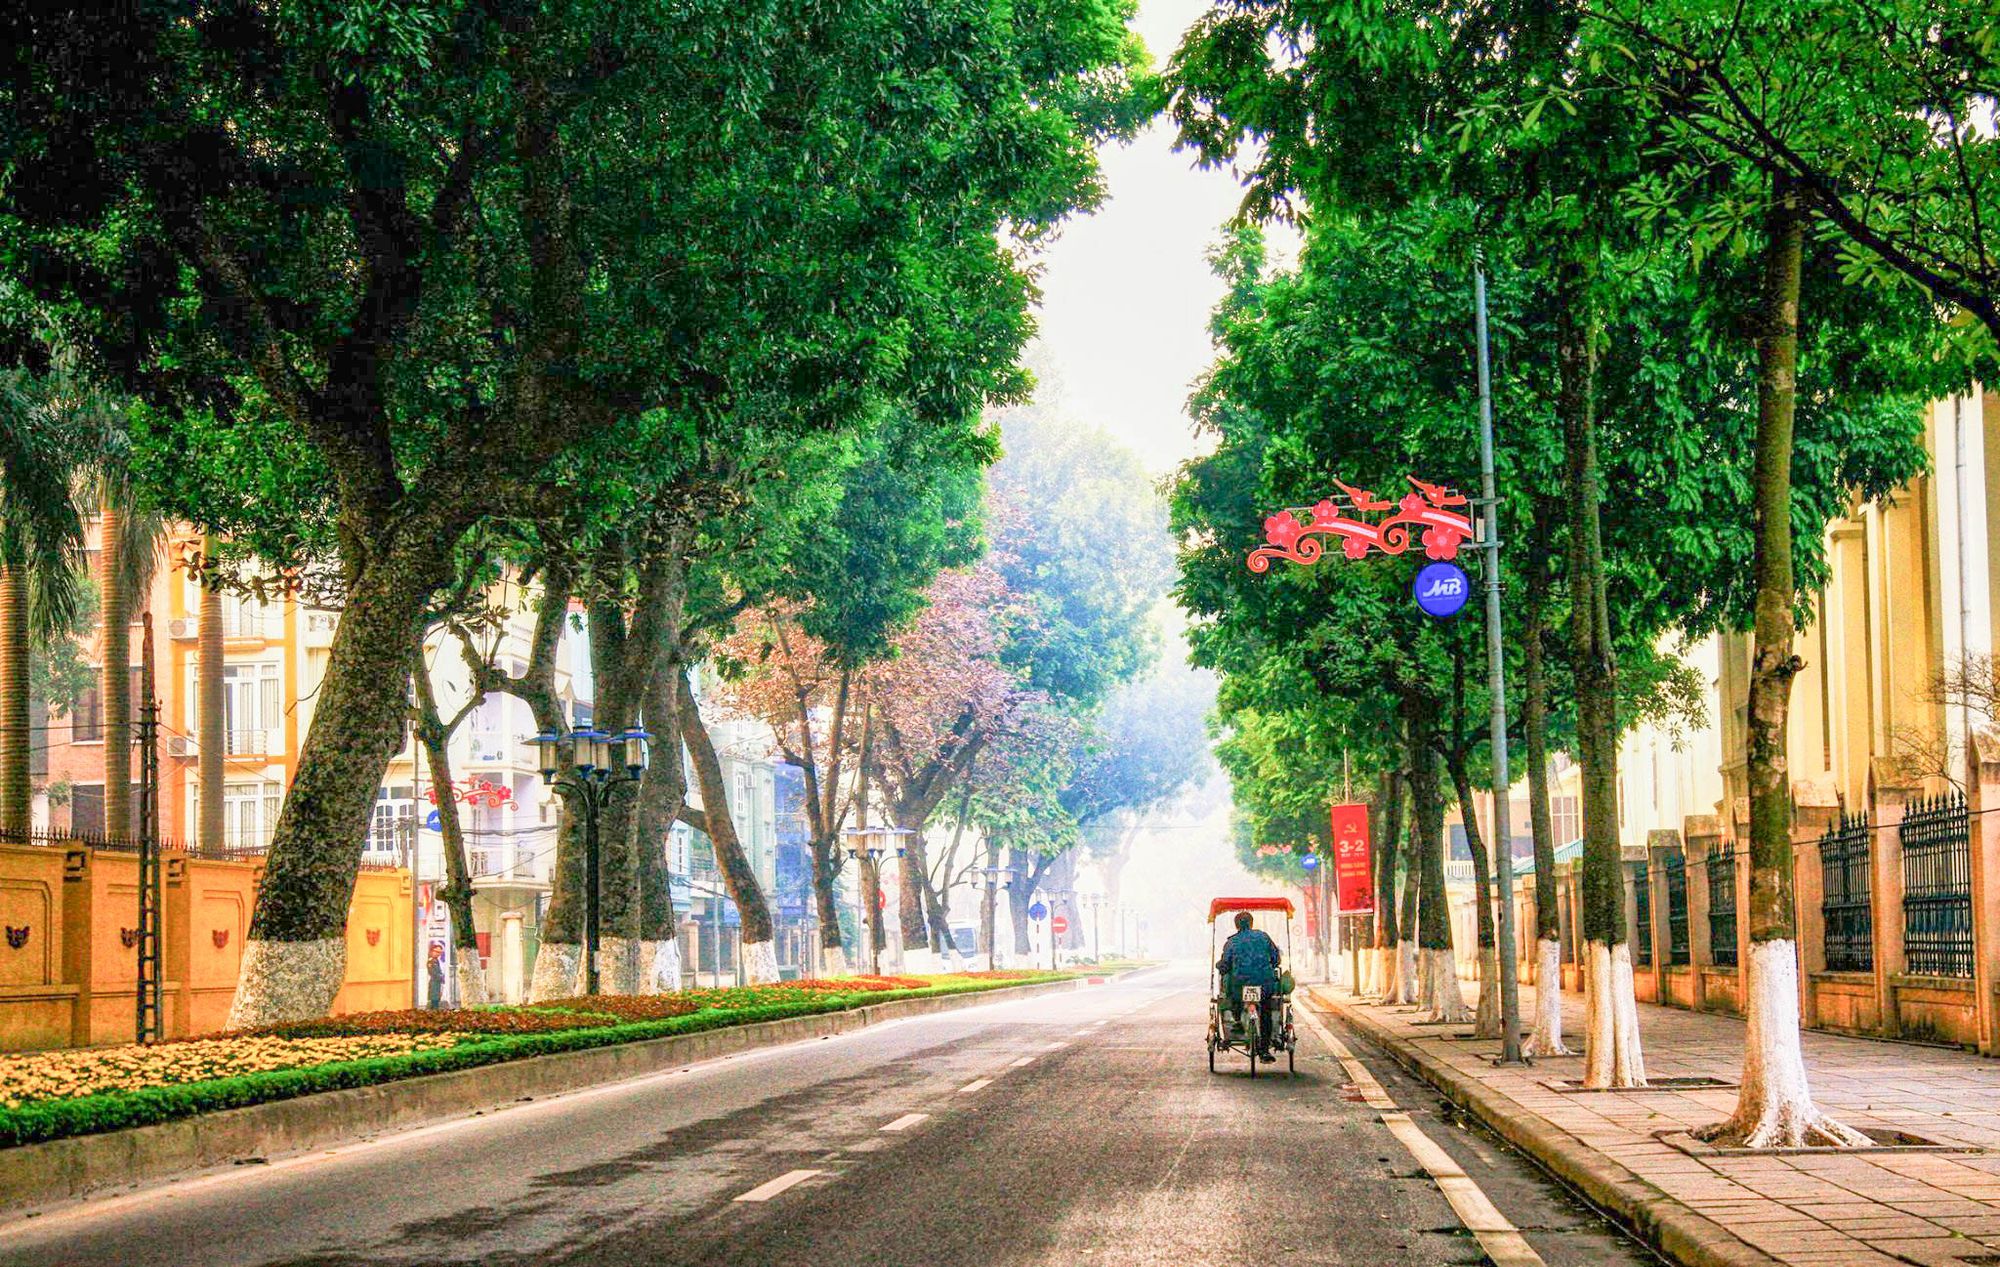 2 days in Hanoi: Where to go?